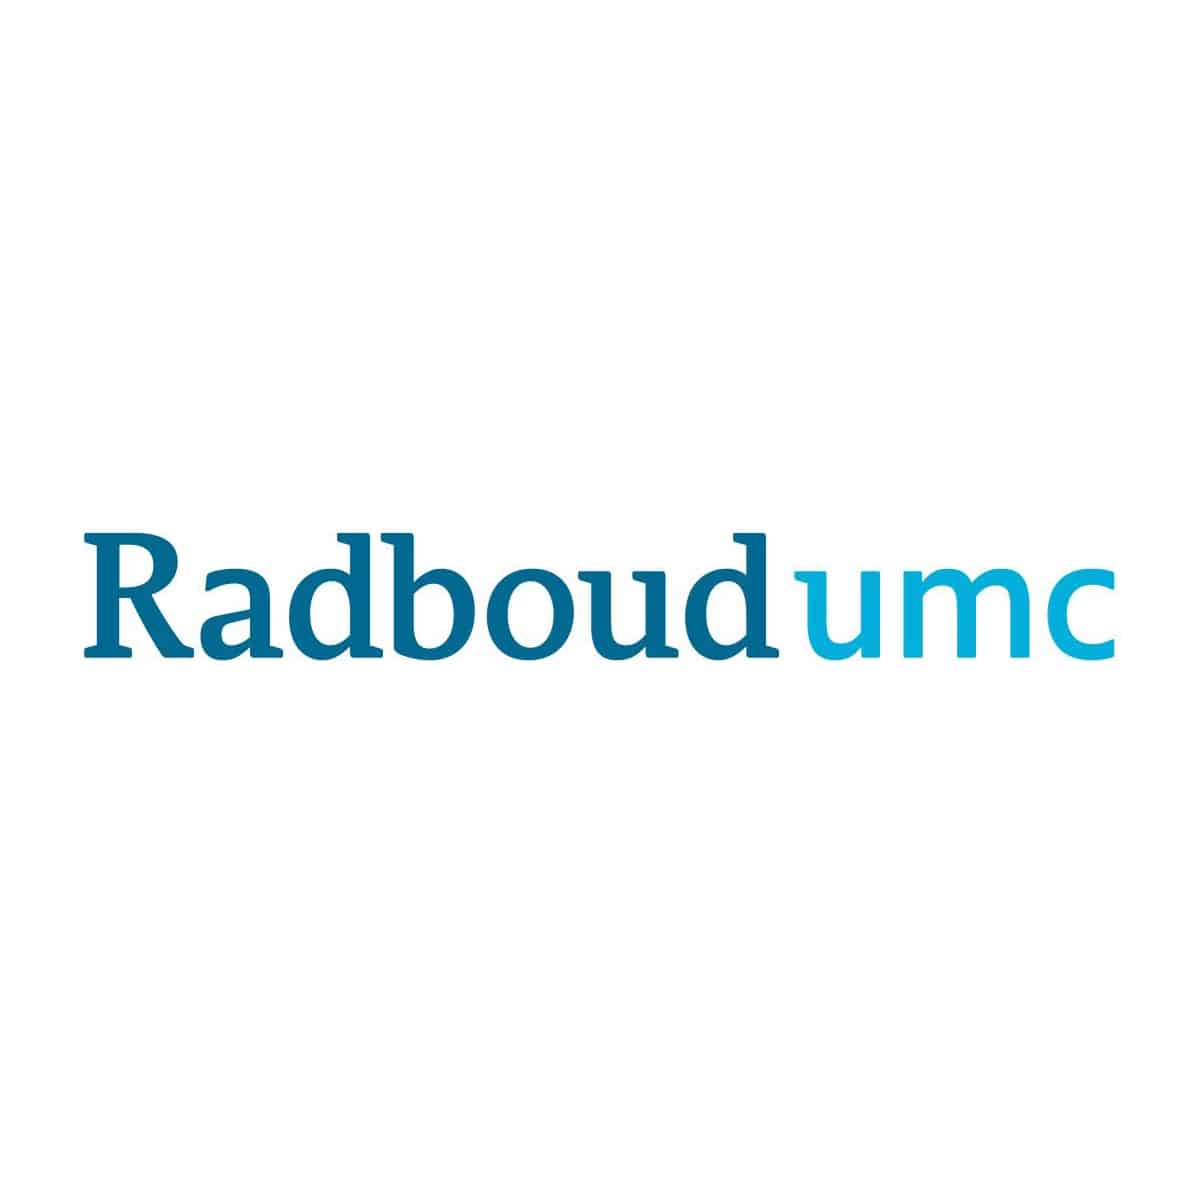 Radboudumc logo